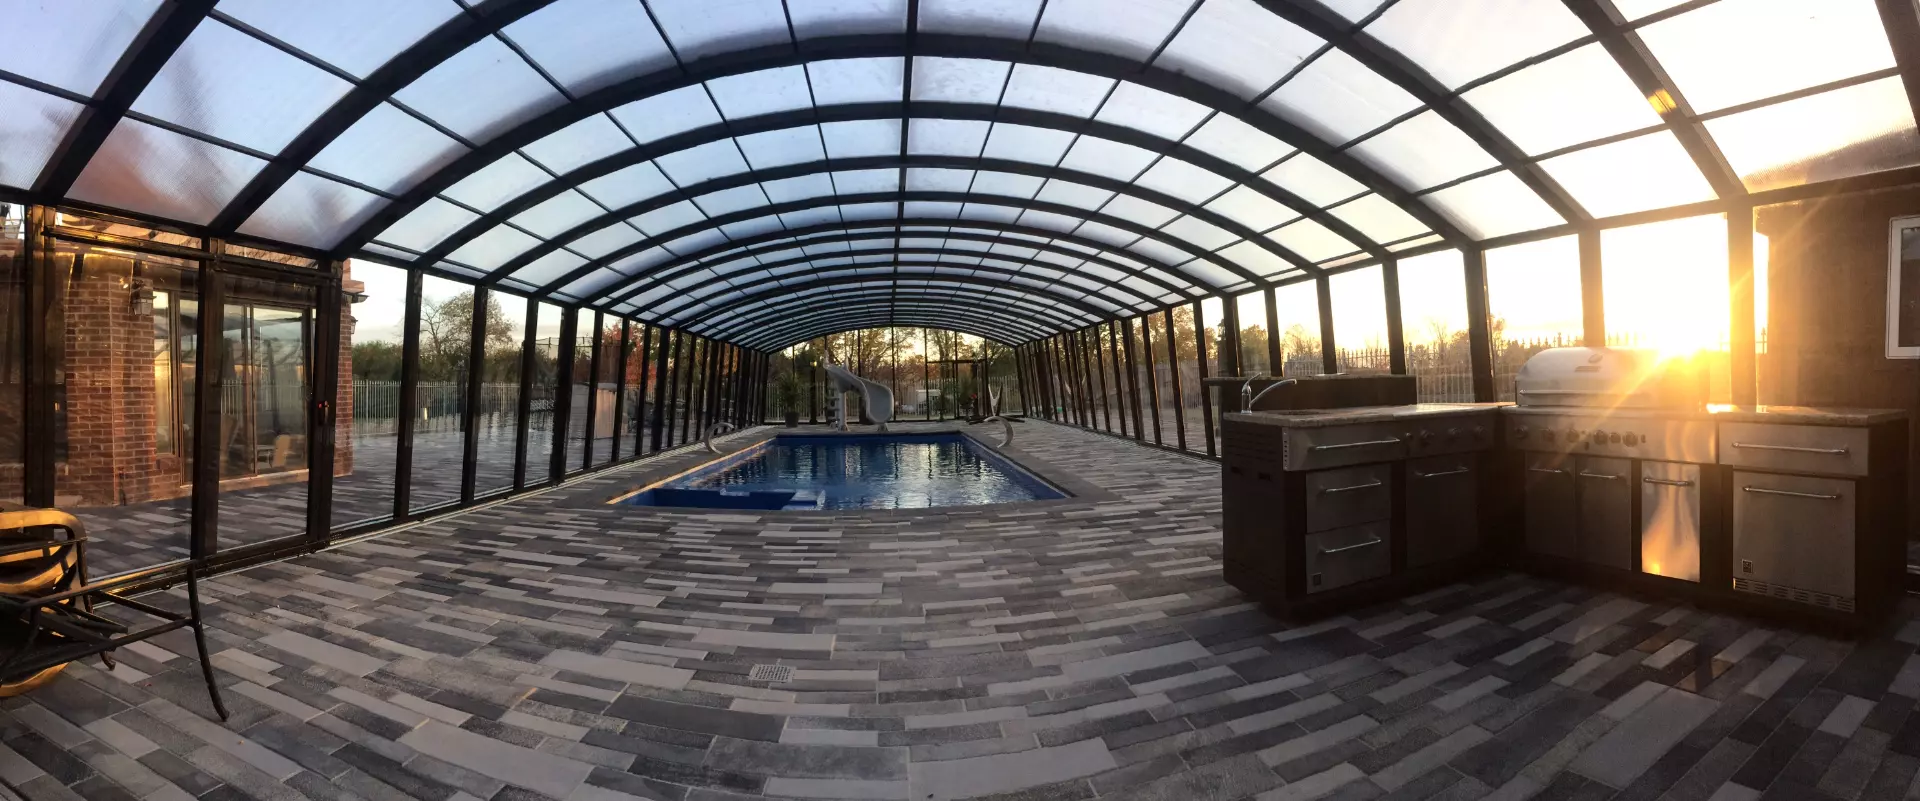 Large enclosure for swimming pool